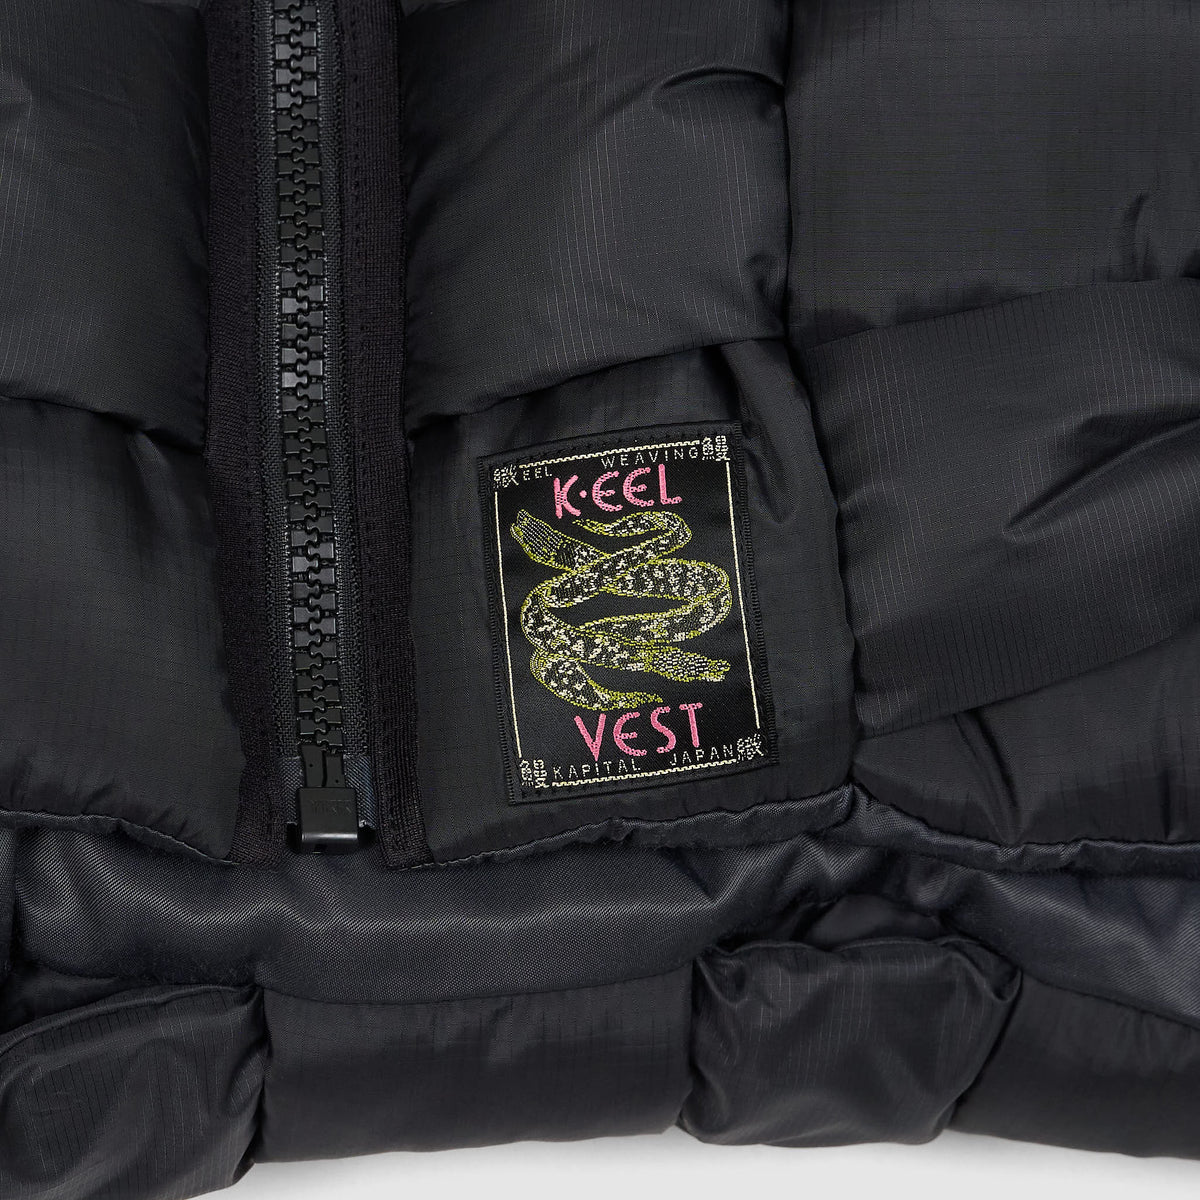 Kapital Bandana Reversible Print K-eel Weaving Vest